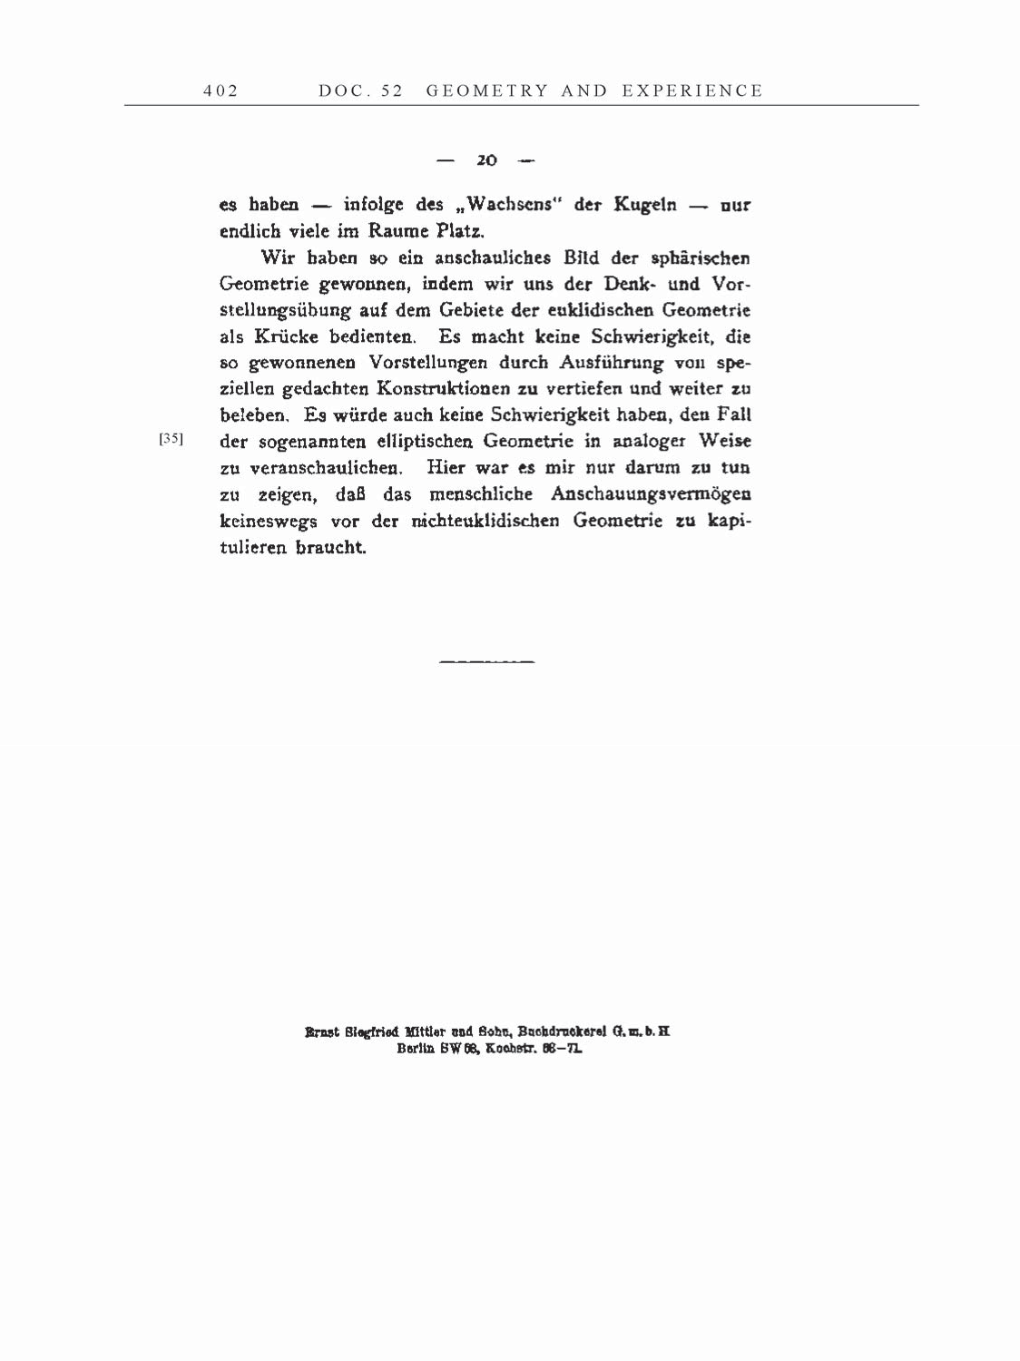 Volume 7: The Berlin Years: Writings, 1918-1921 page 402